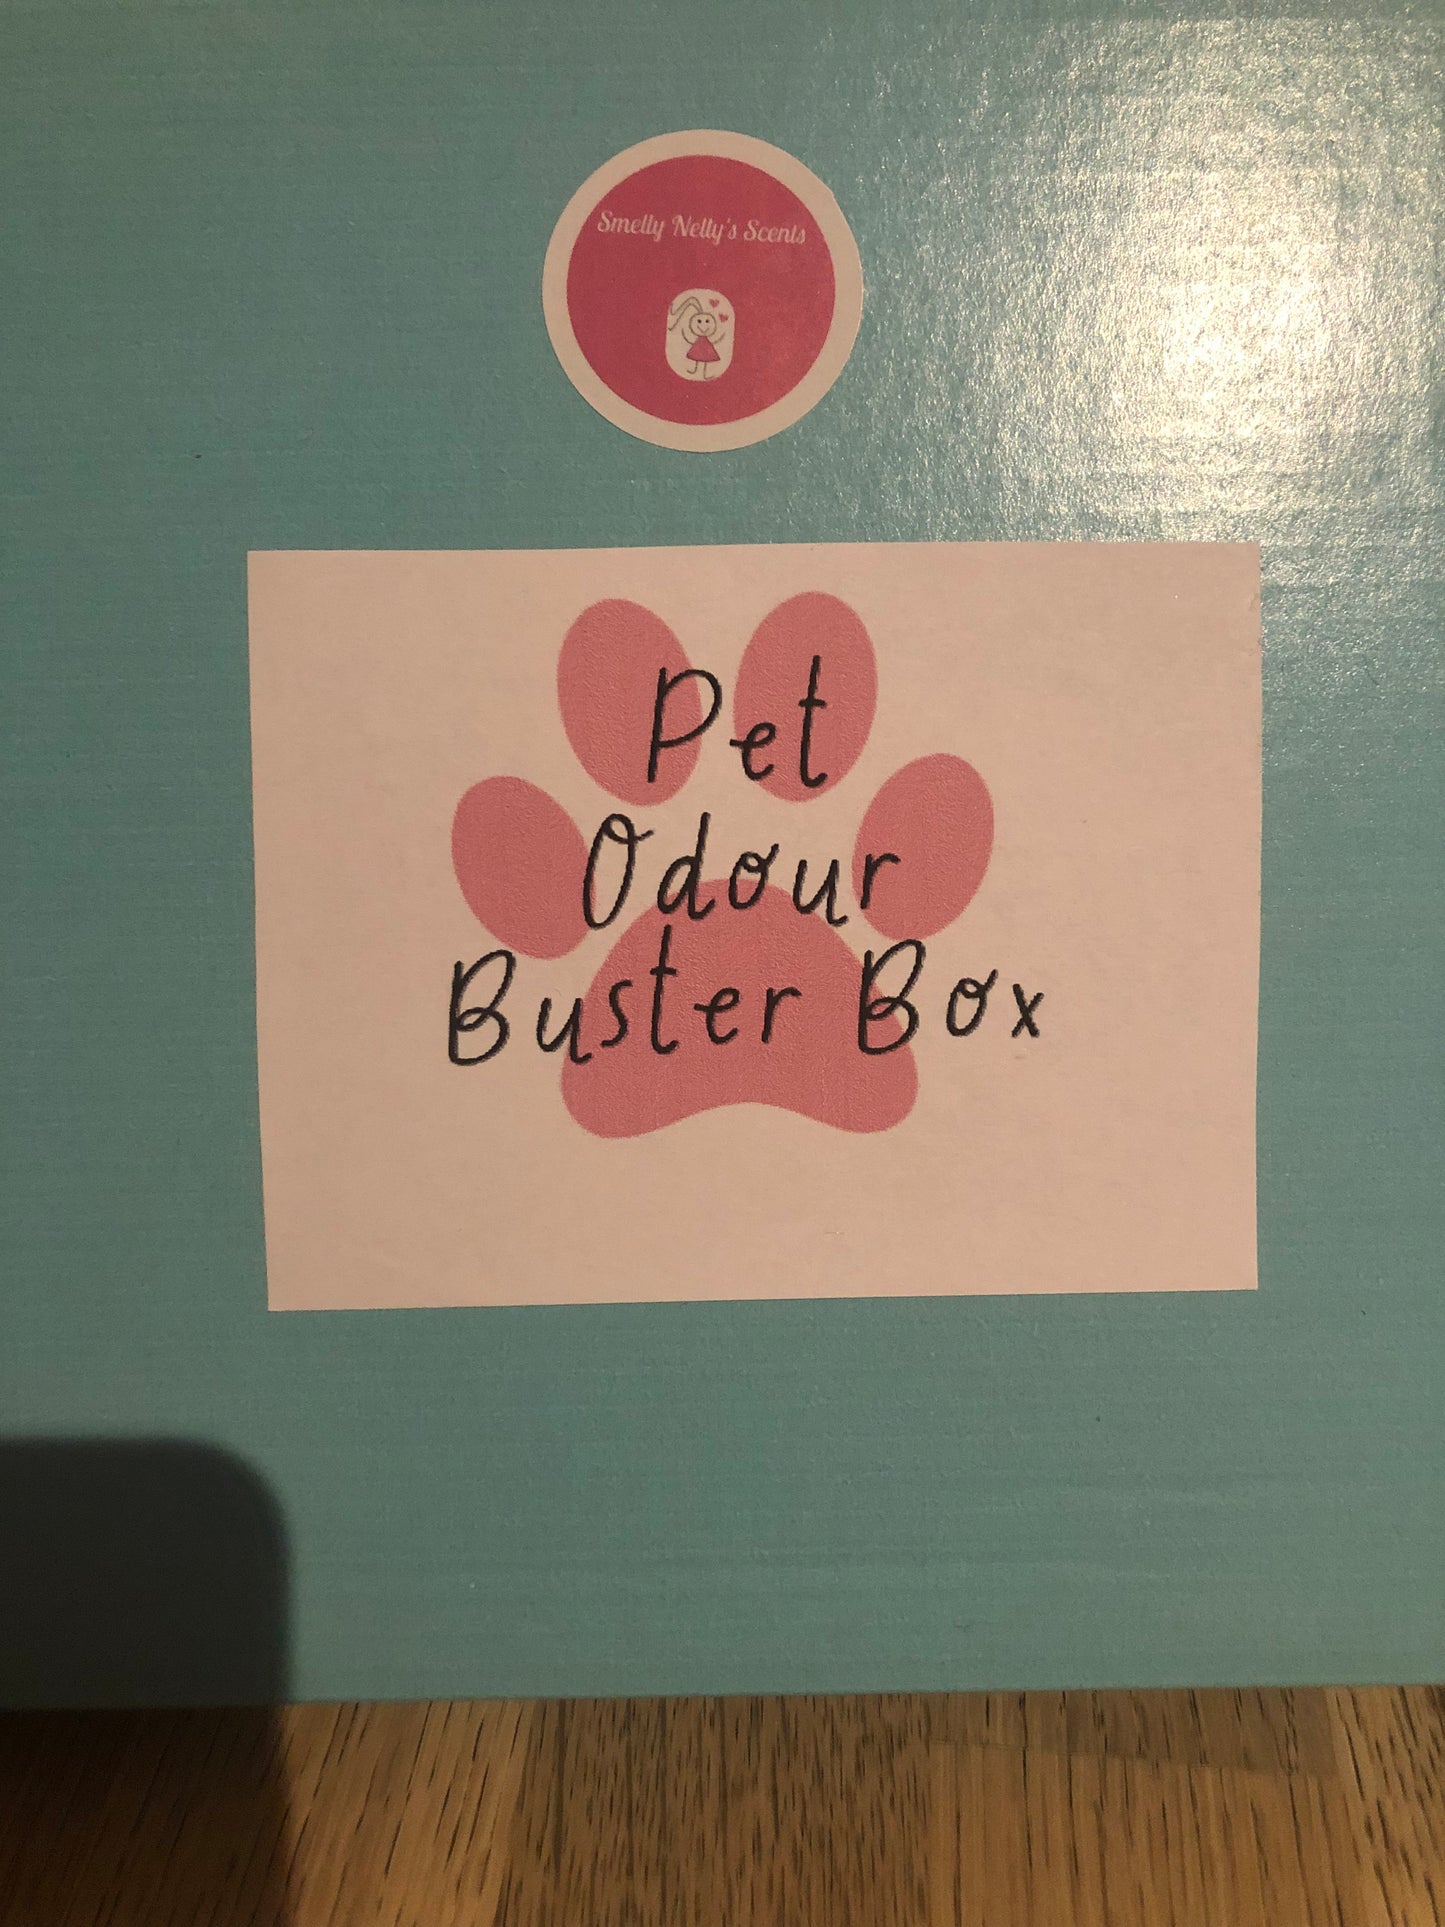 Pet odour buster box